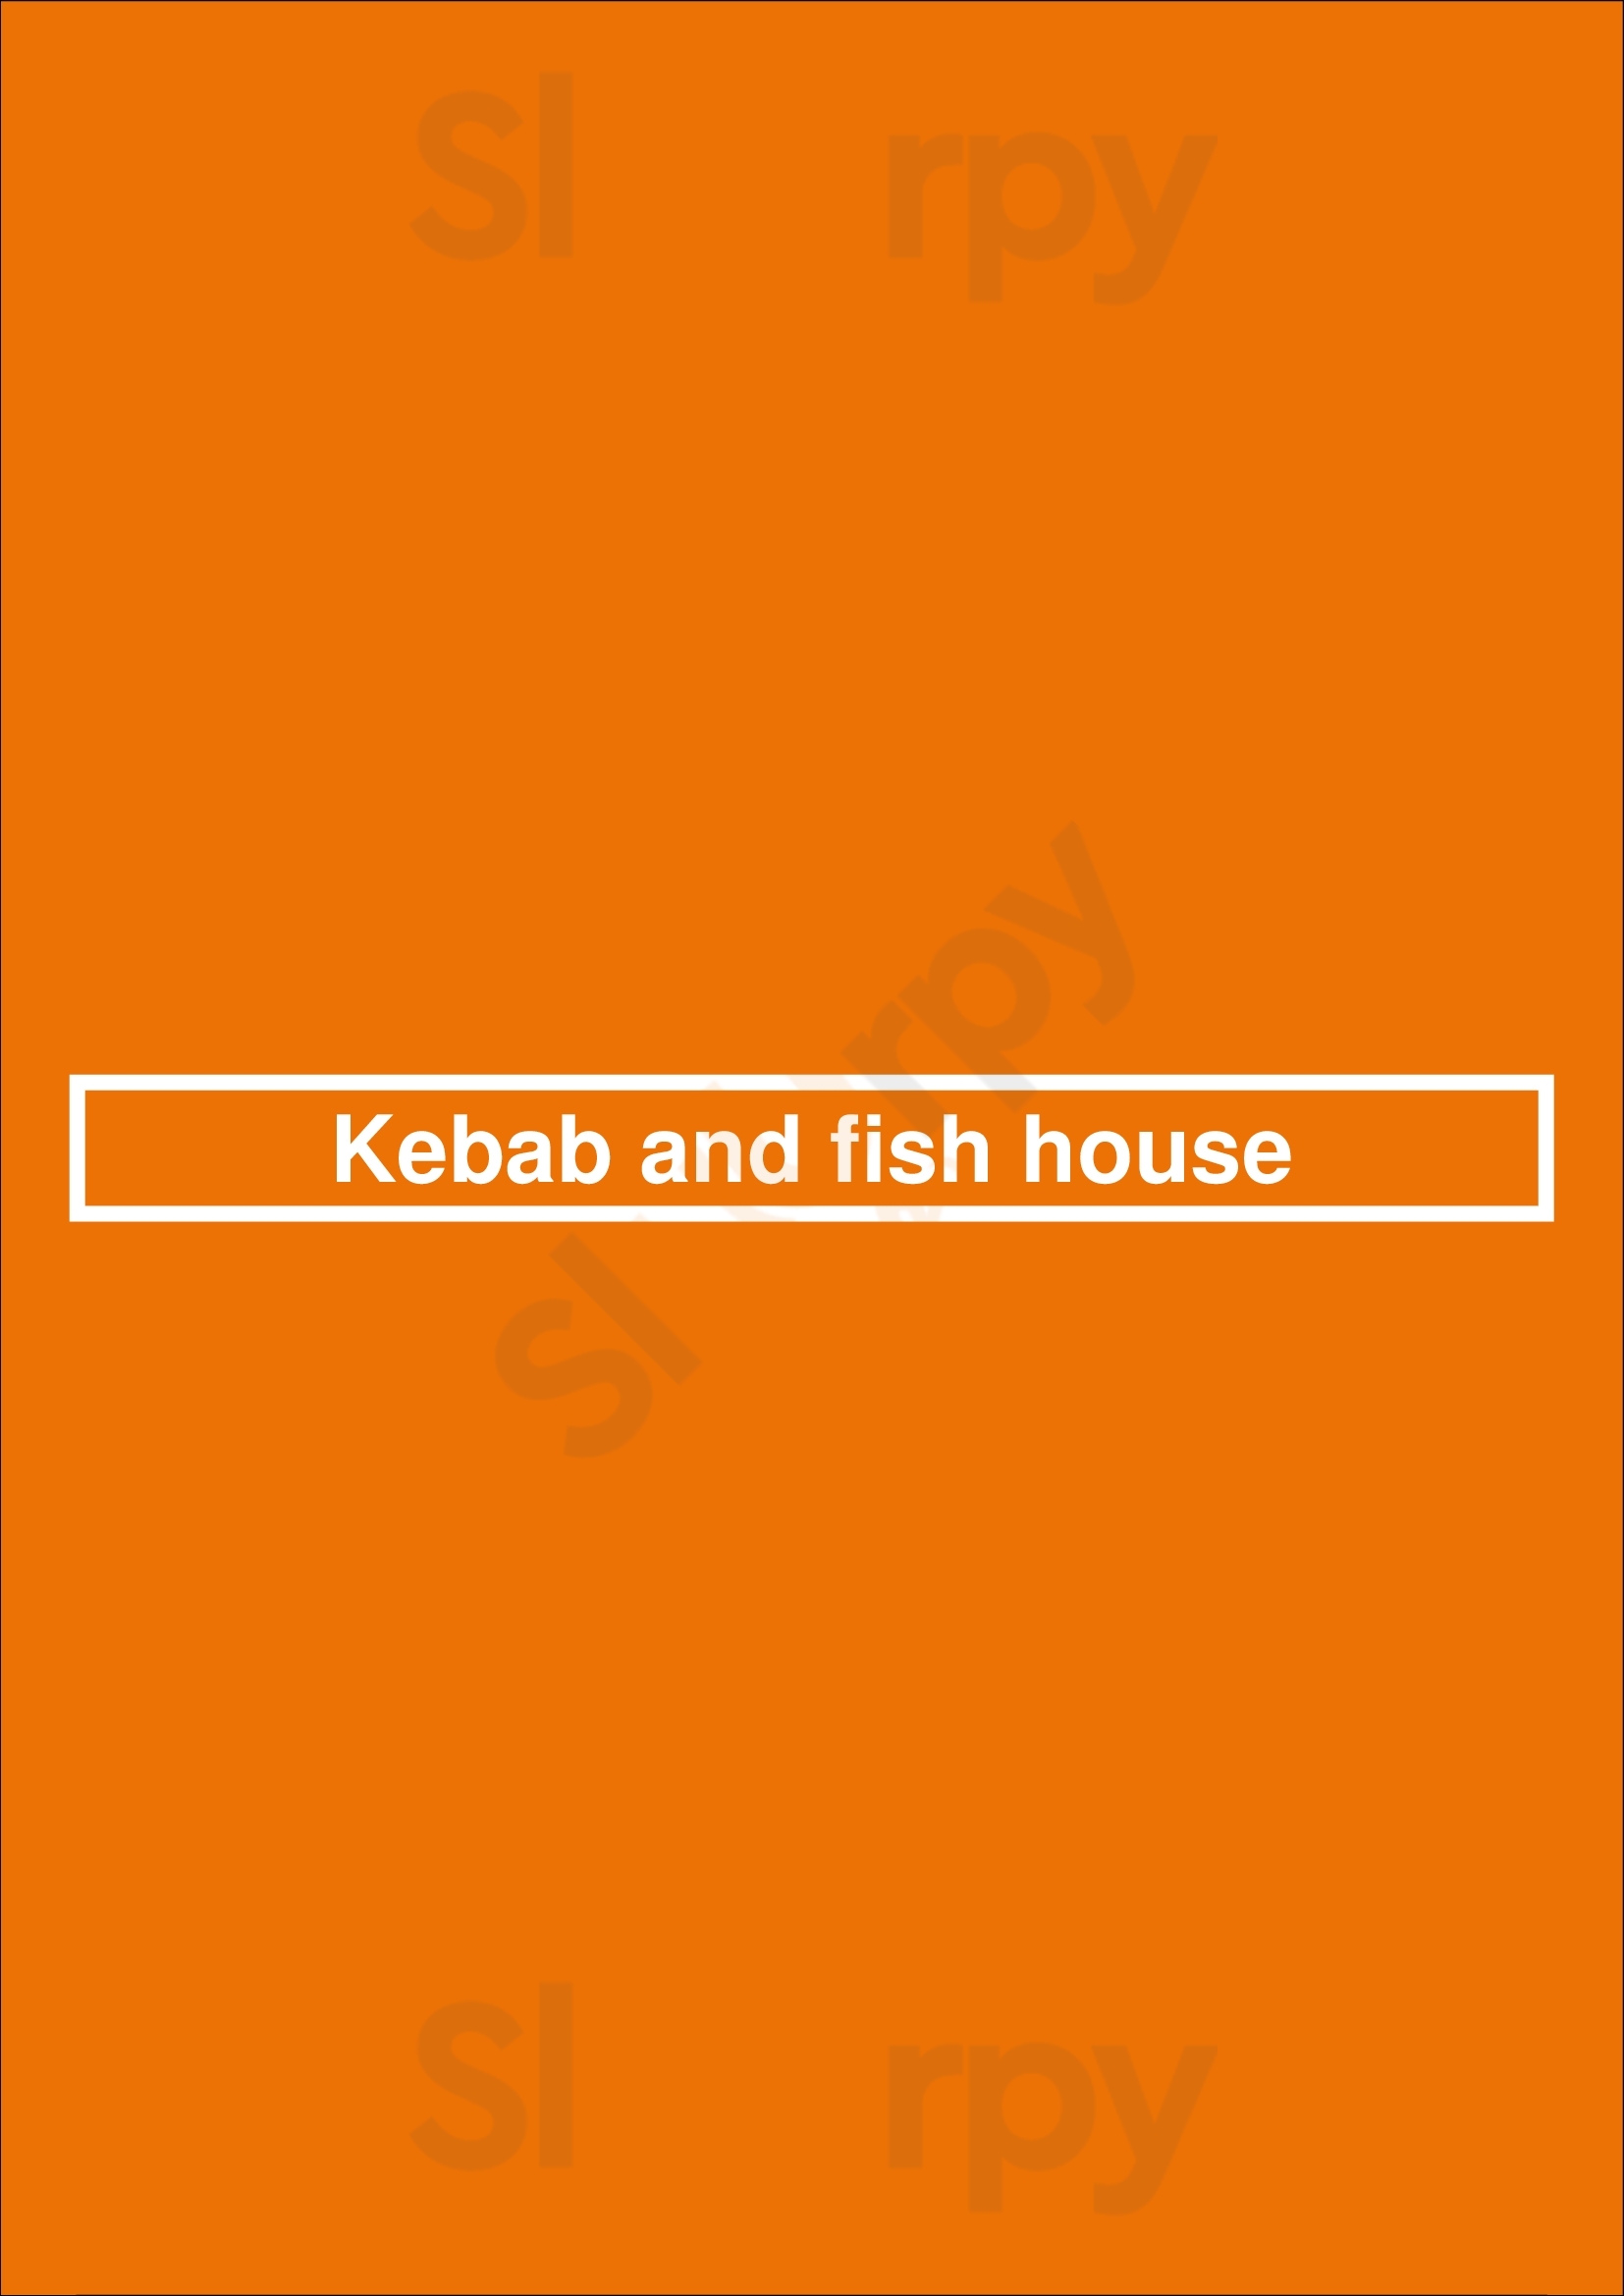 Kebab And Fish House Southampton Menu - 1